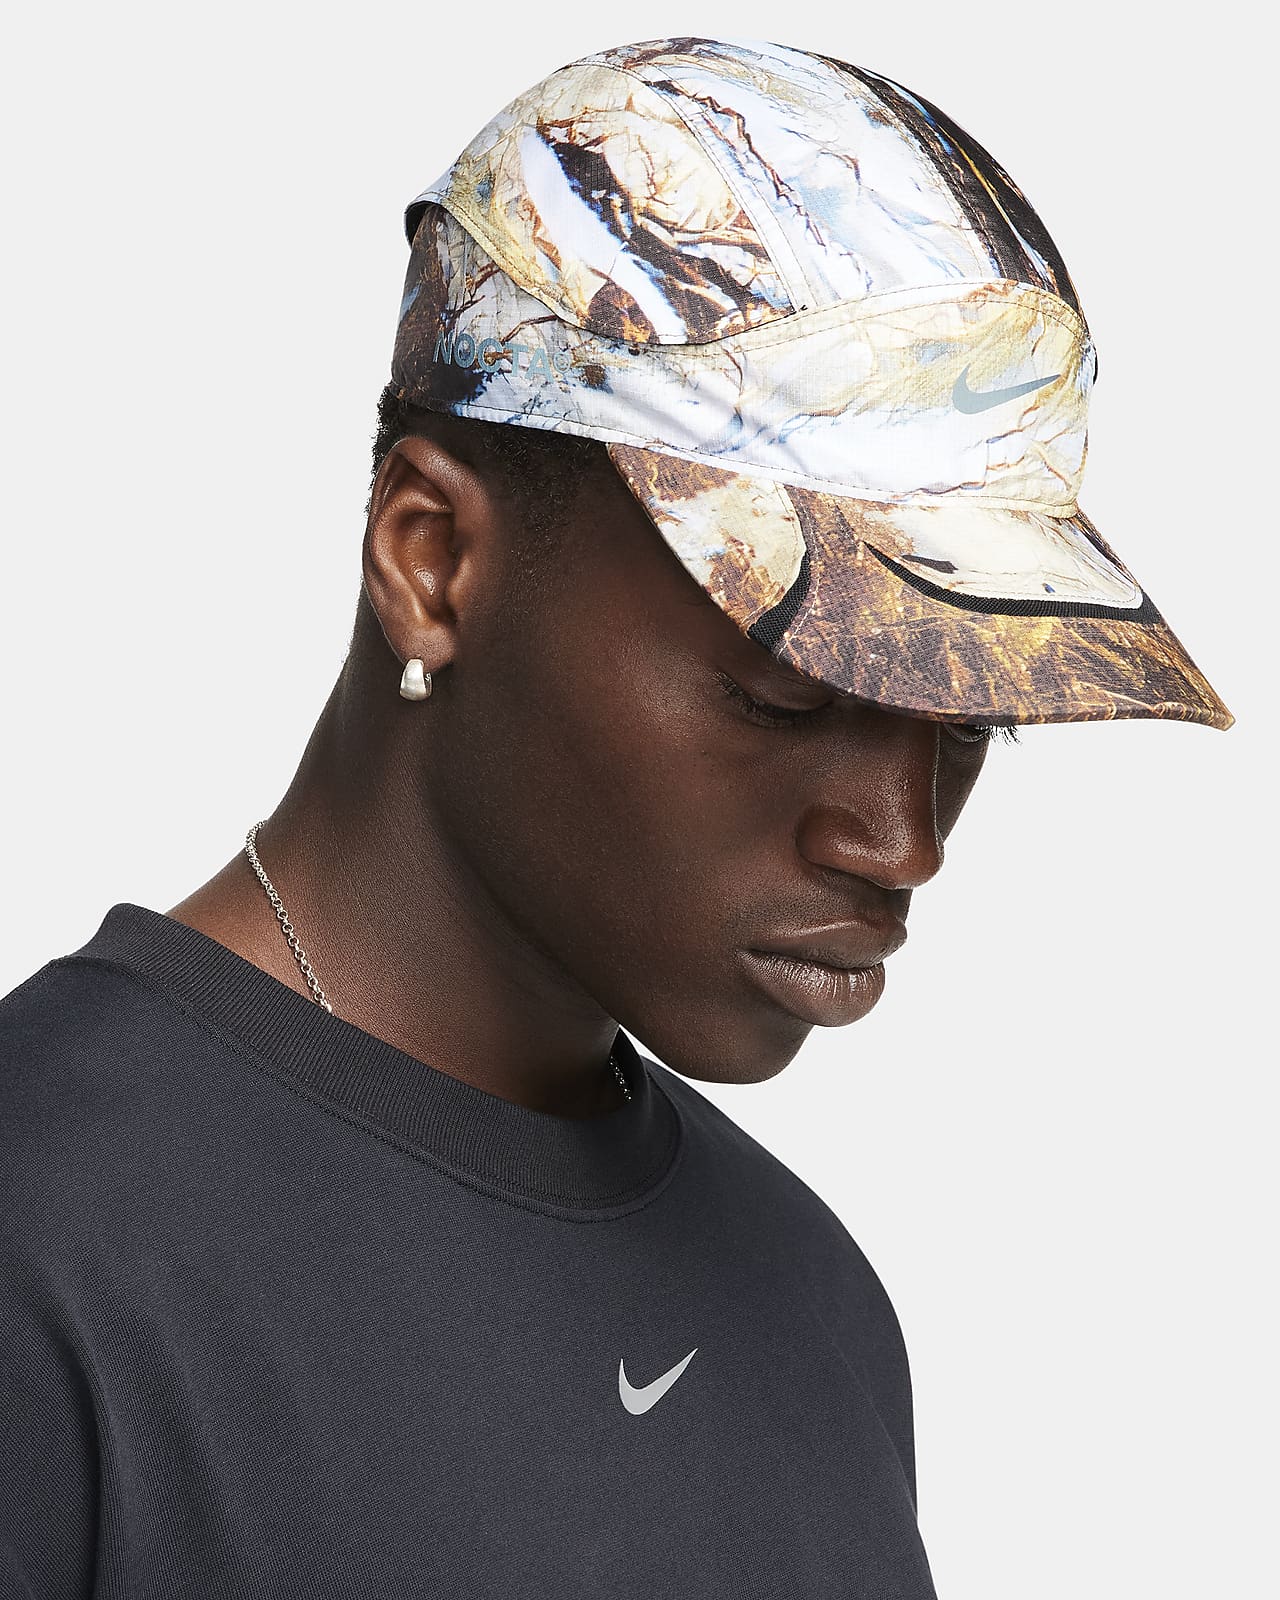 Cap. Nike.com